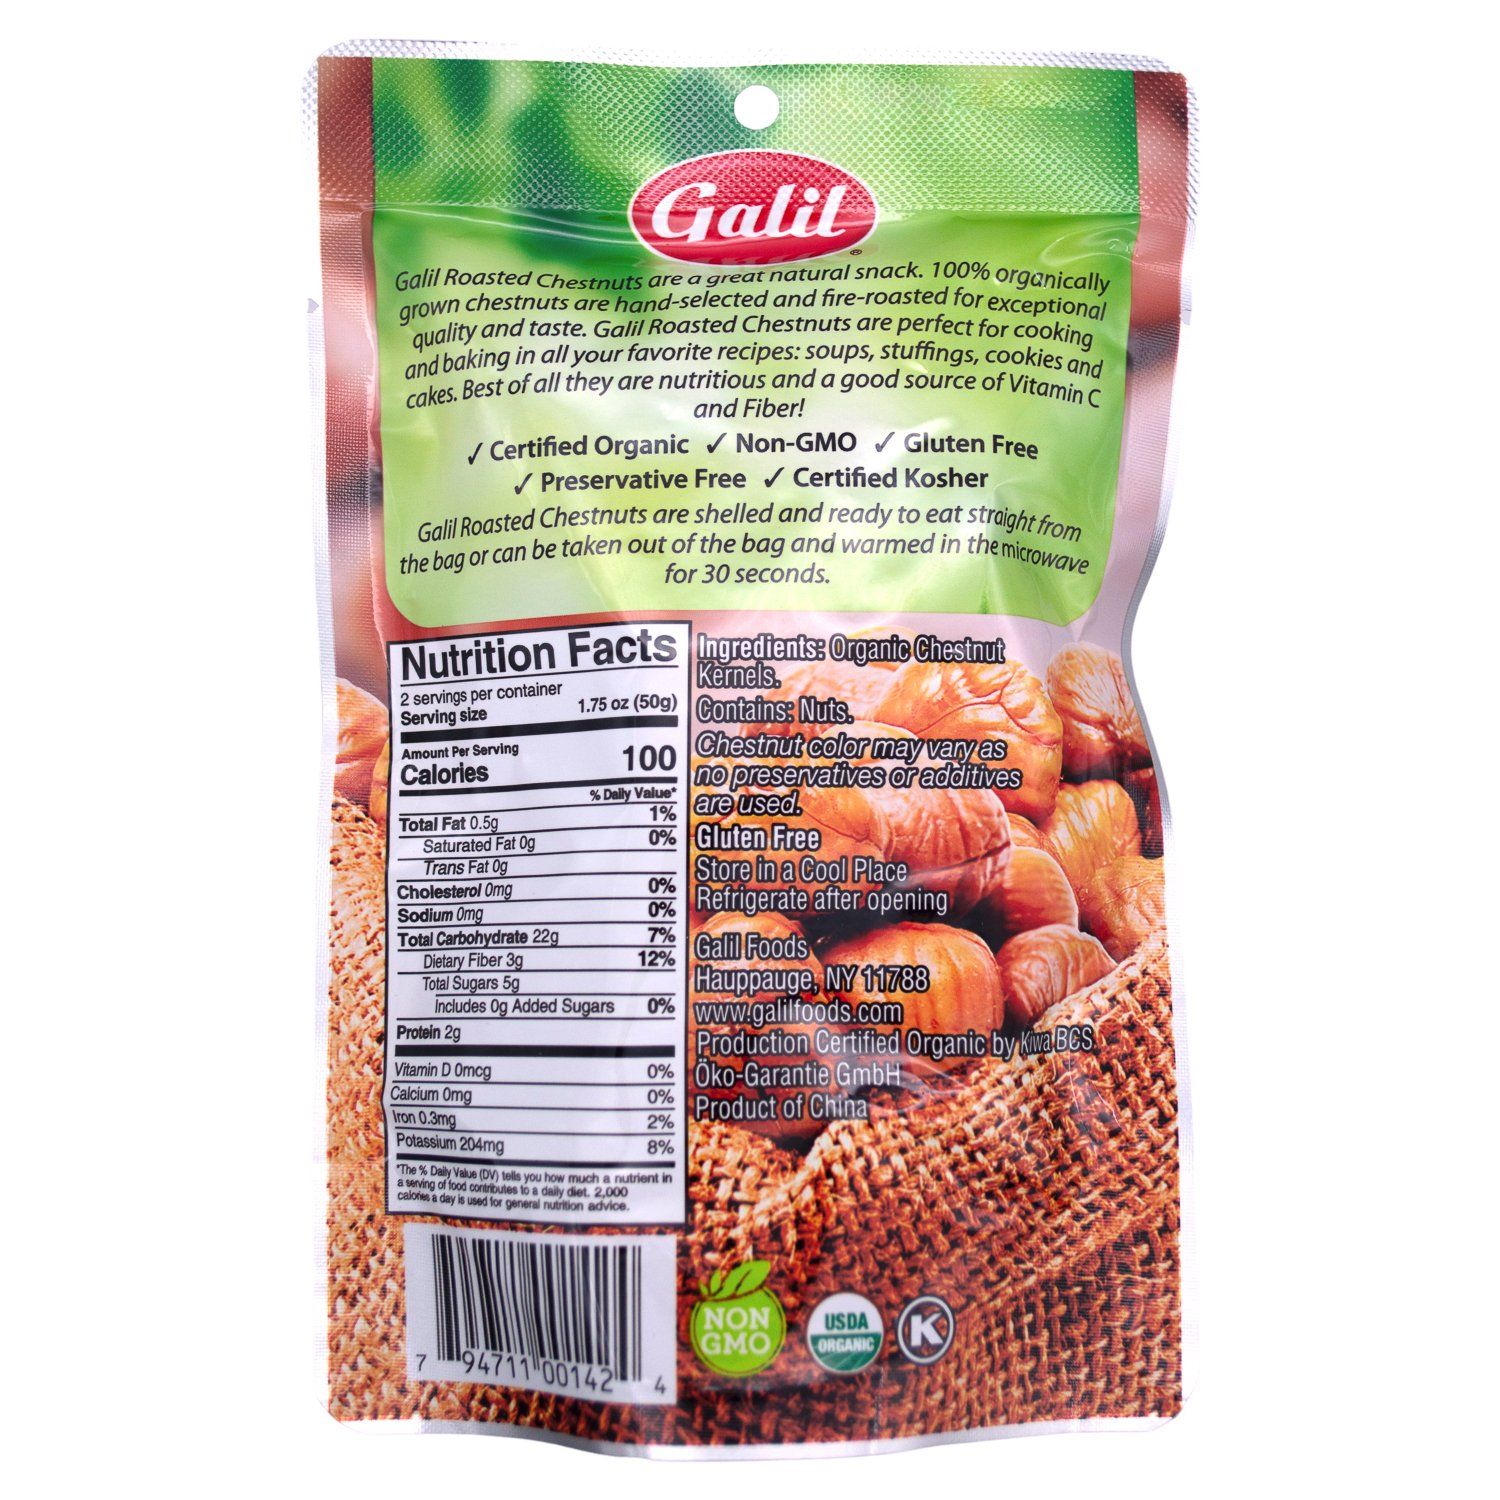 Galil Organic Roasted Chestnuts Galil 